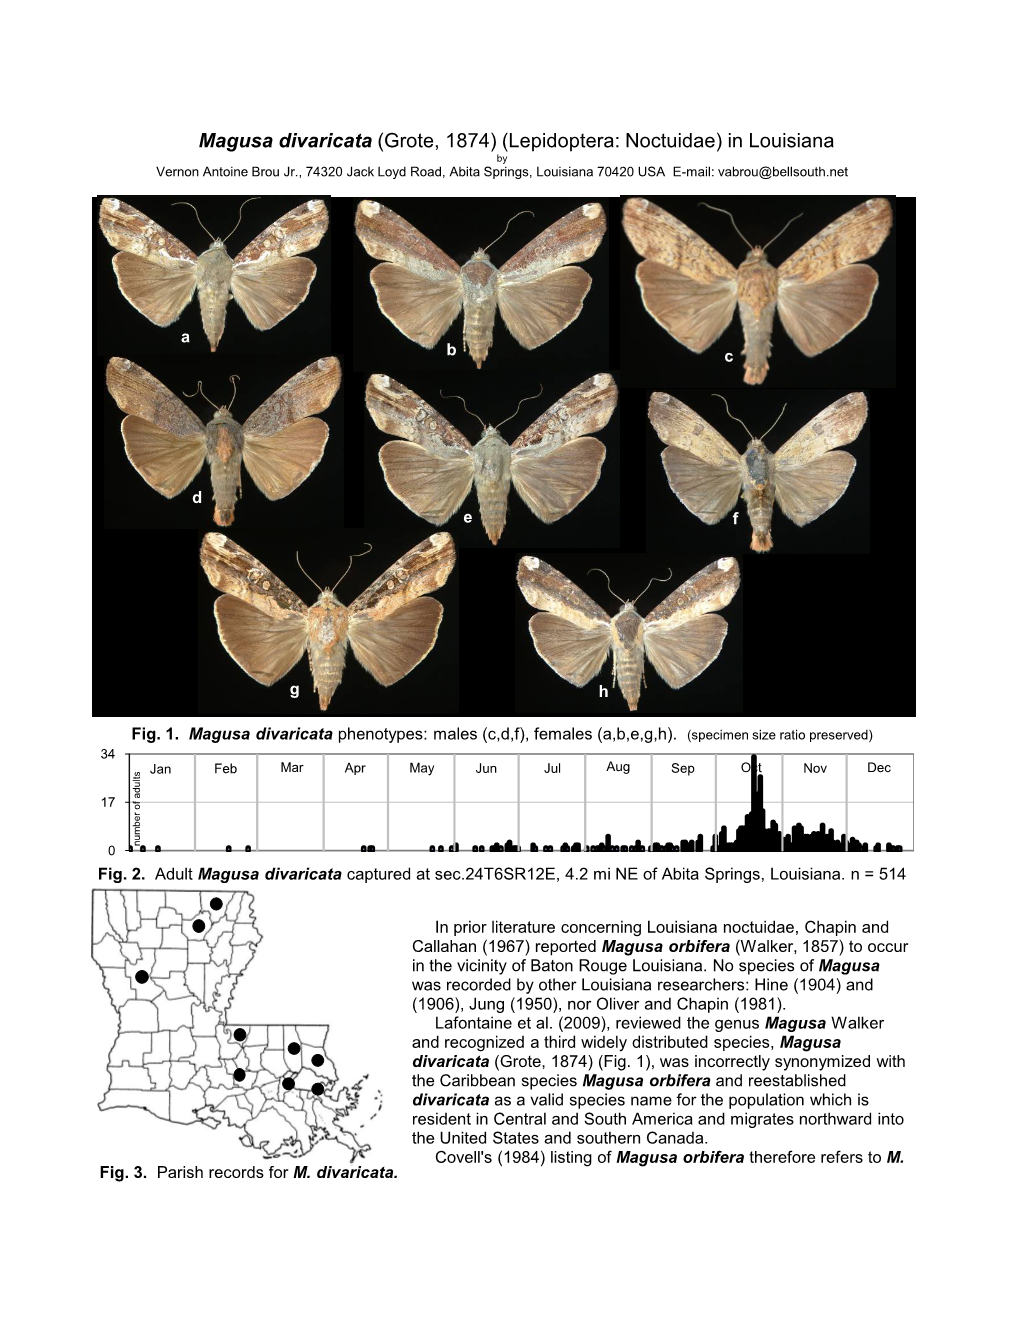 Magusa Divaricata (Grote, 1874) (Lepidoptera: Noctuidae)